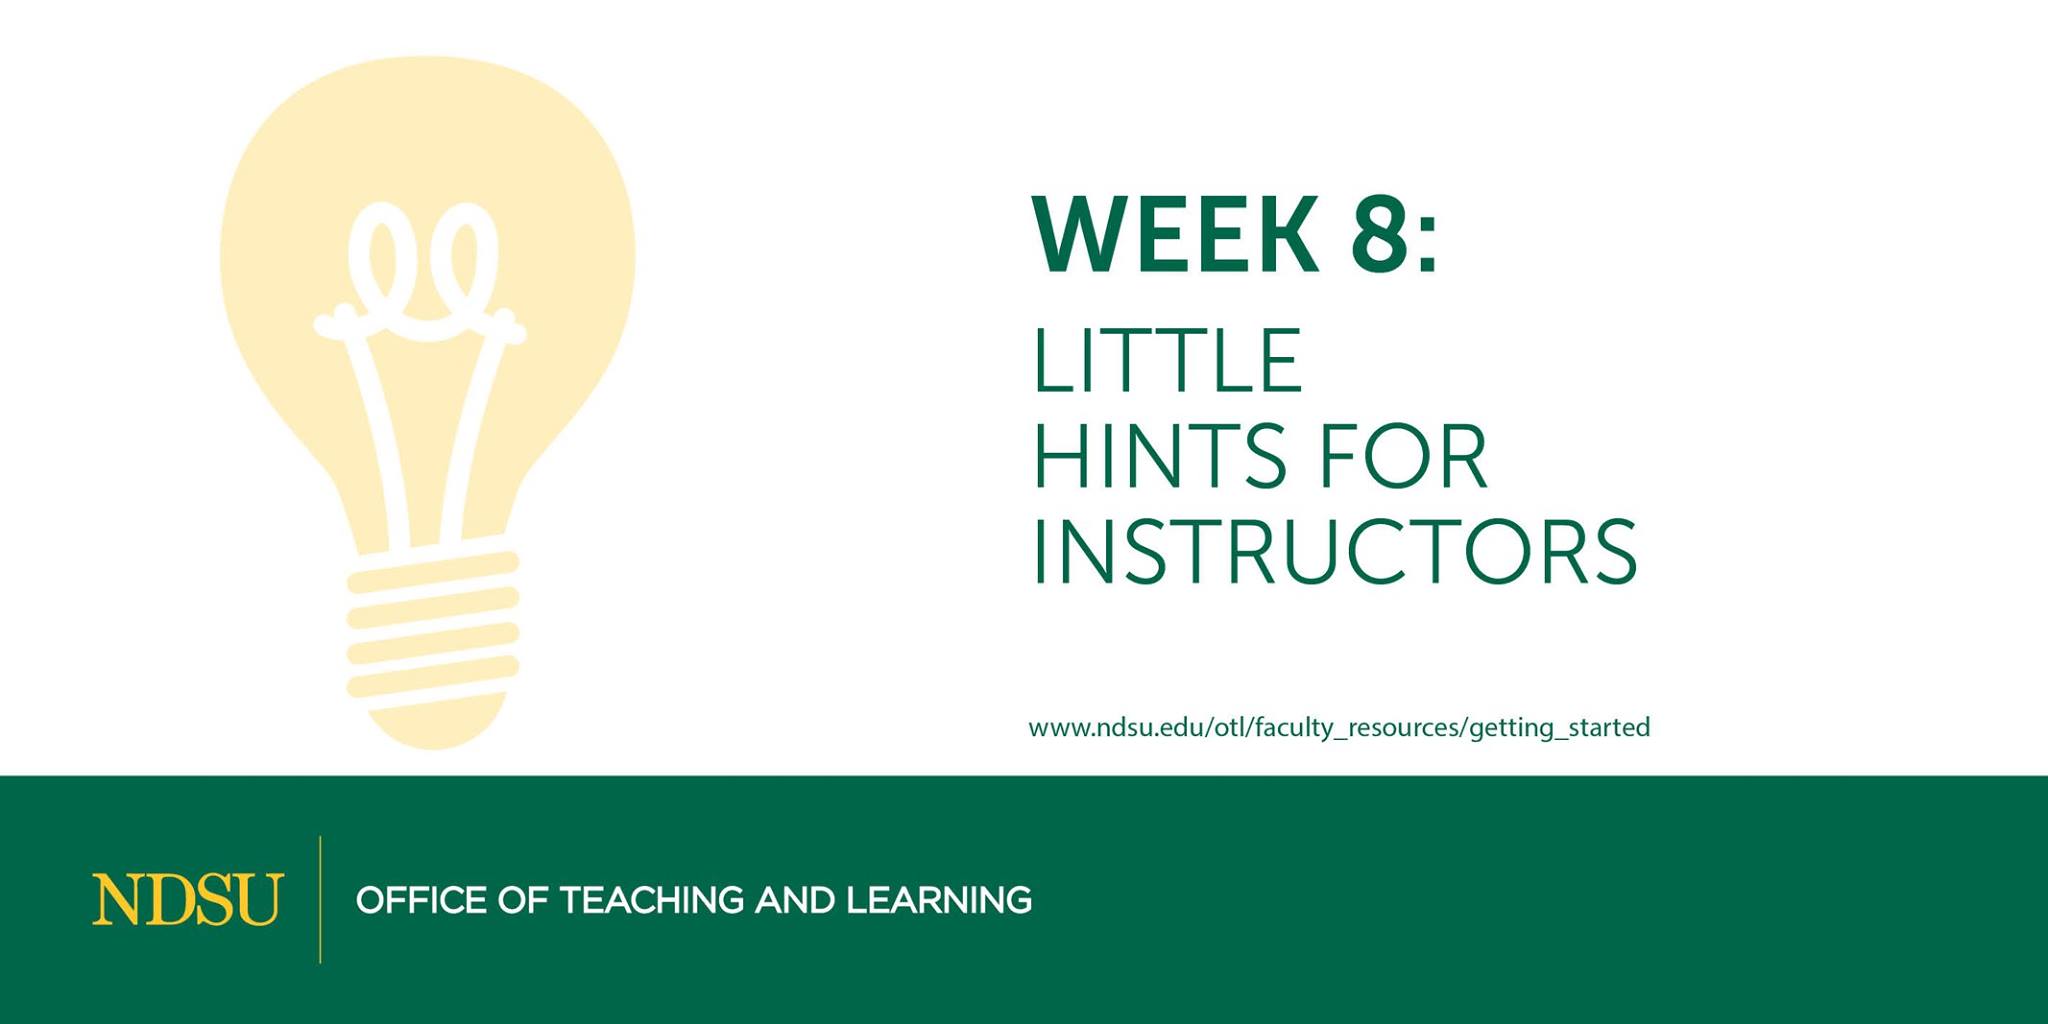 Week 8 Little Hints for Instructors